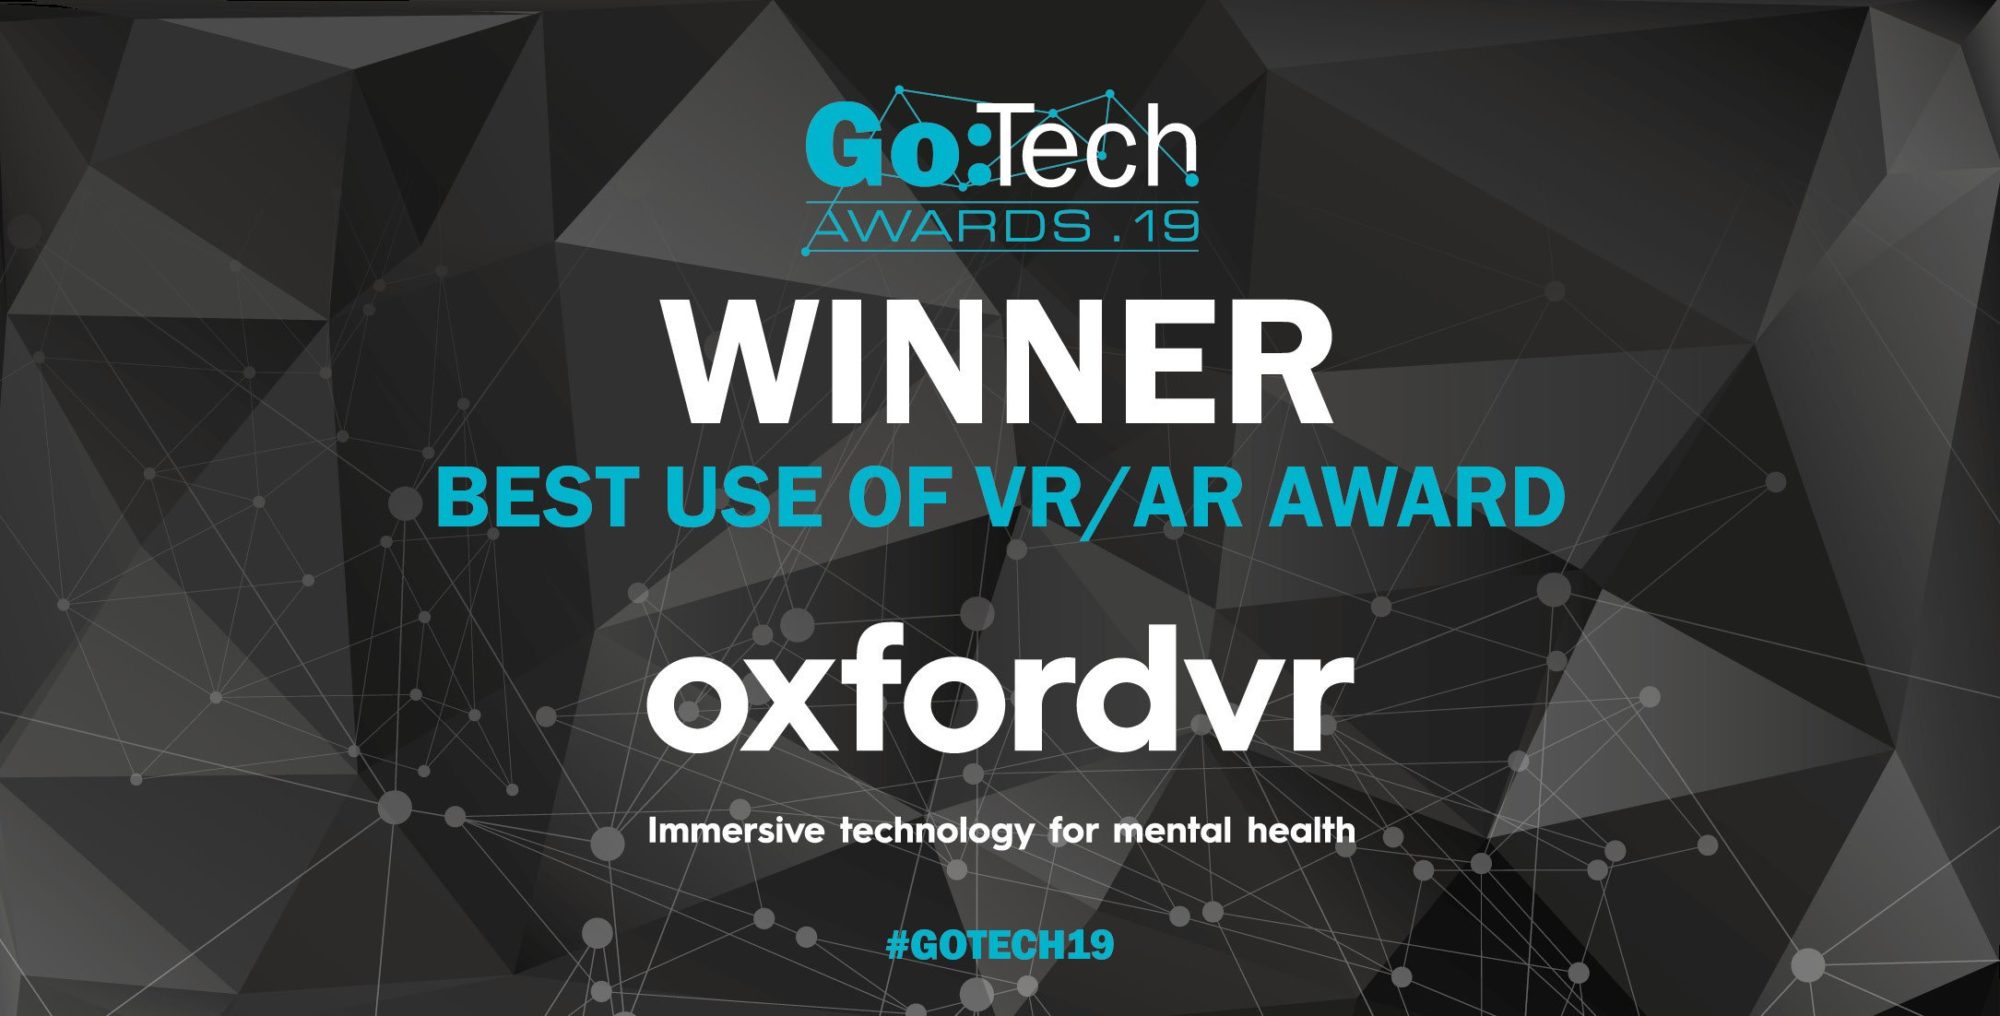 Oxford VR announced as winners at prestigious Go:Tech Awards 19